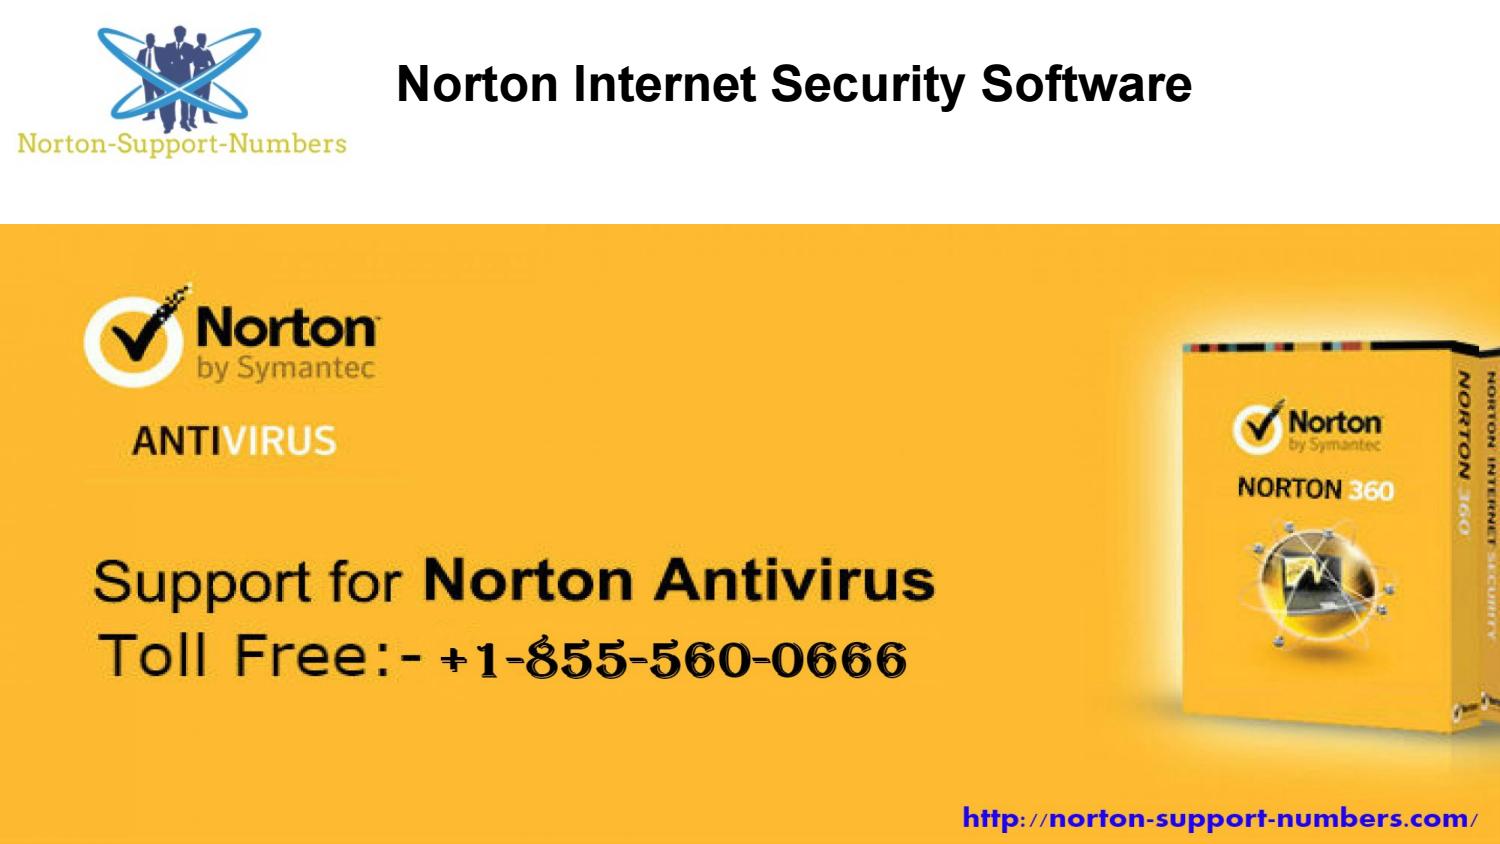 Norton Support Toll